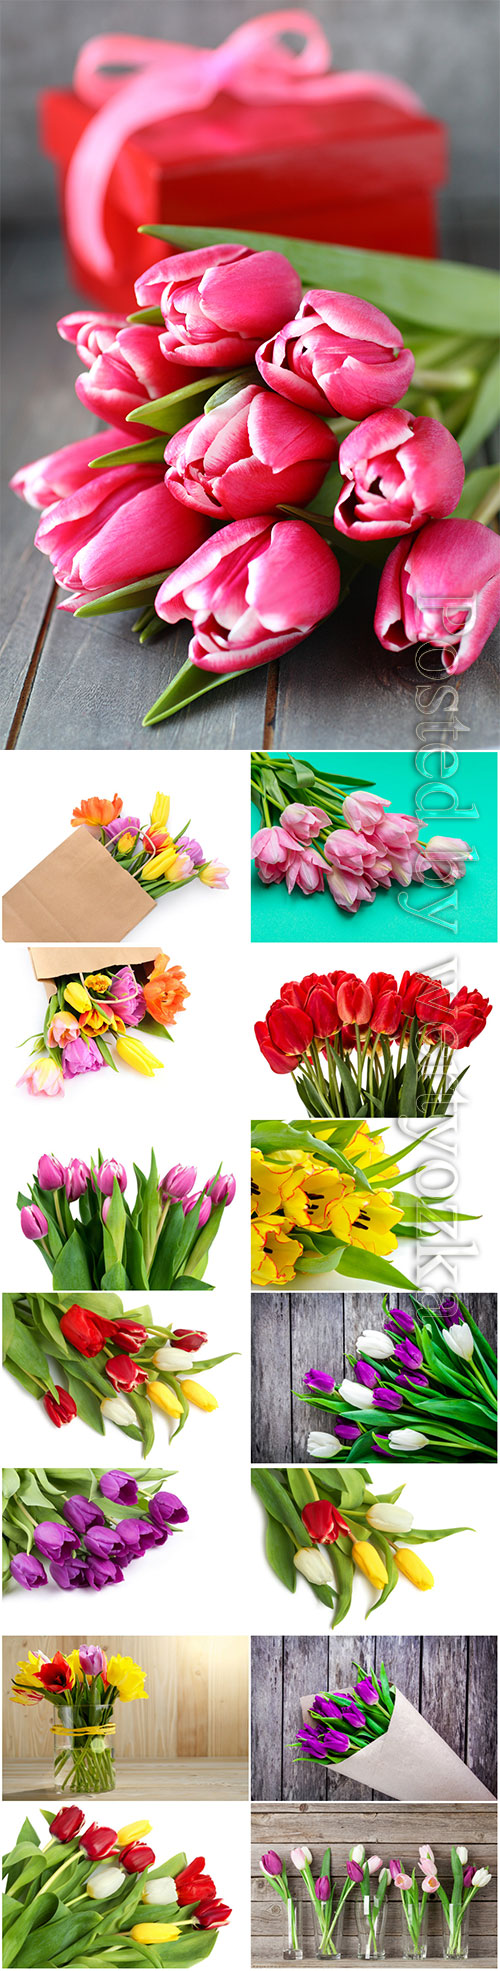 Colorful tulips beautiful stock photo